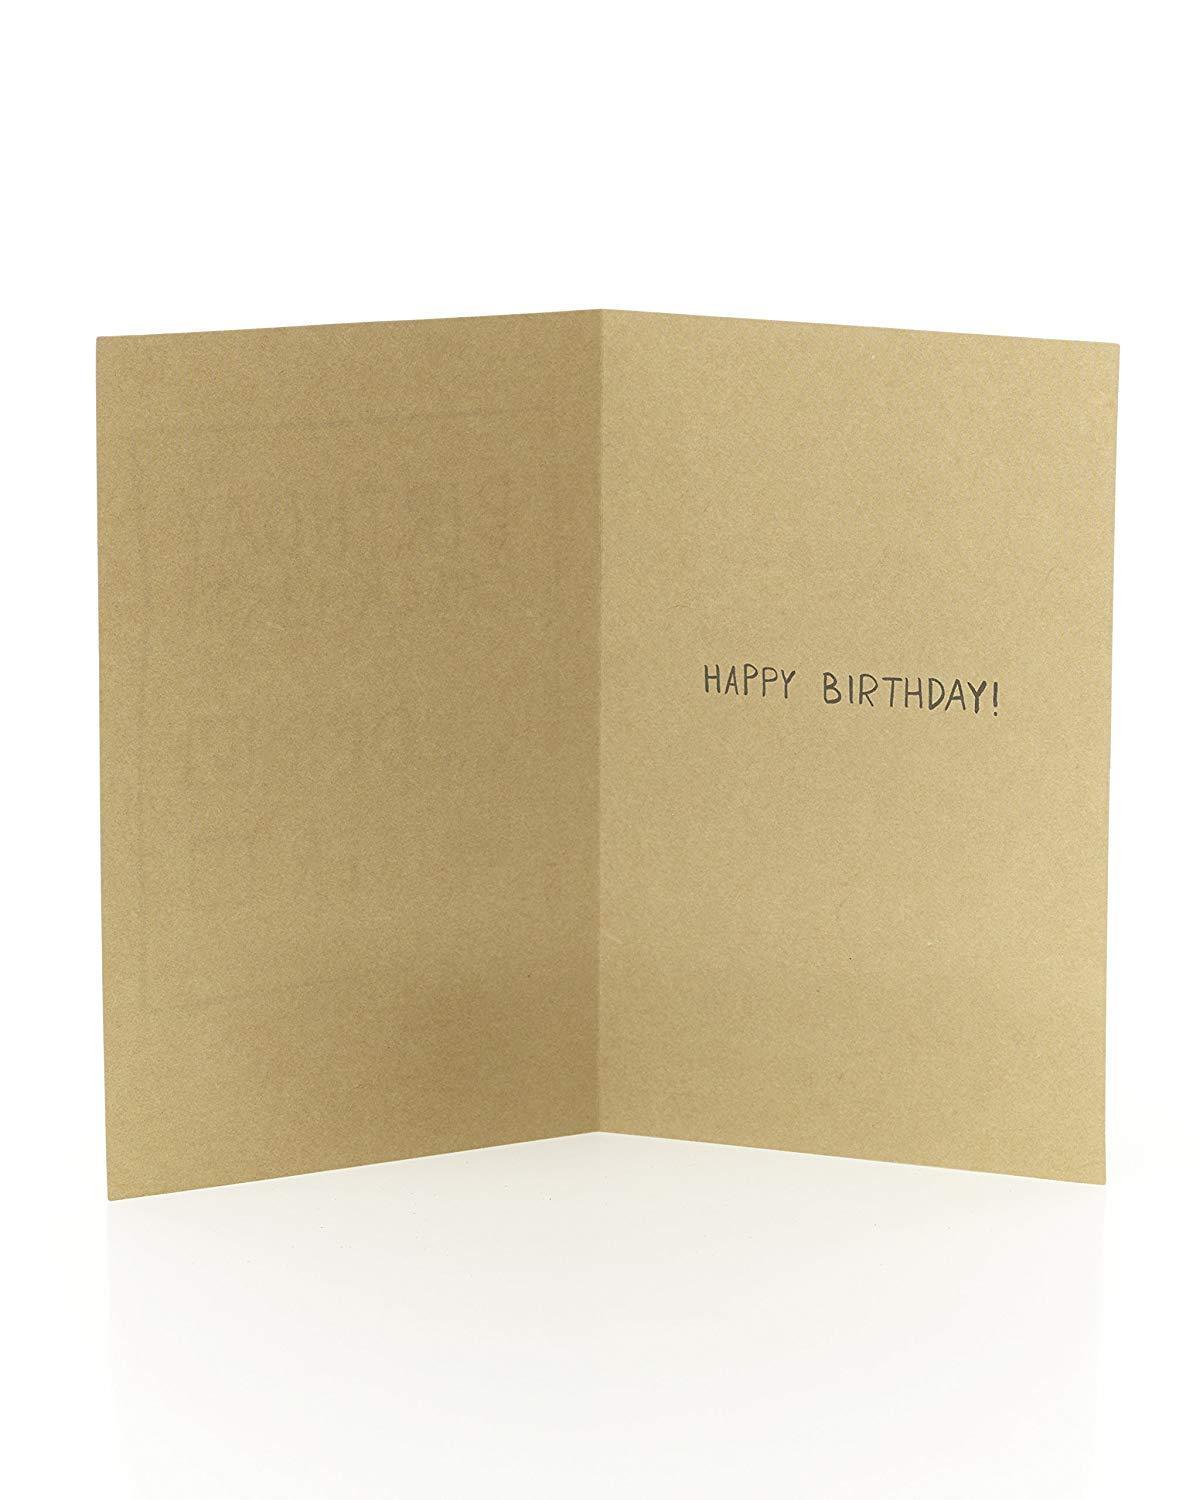 Funny Humorous Birthday Card - Birthday Checklist 